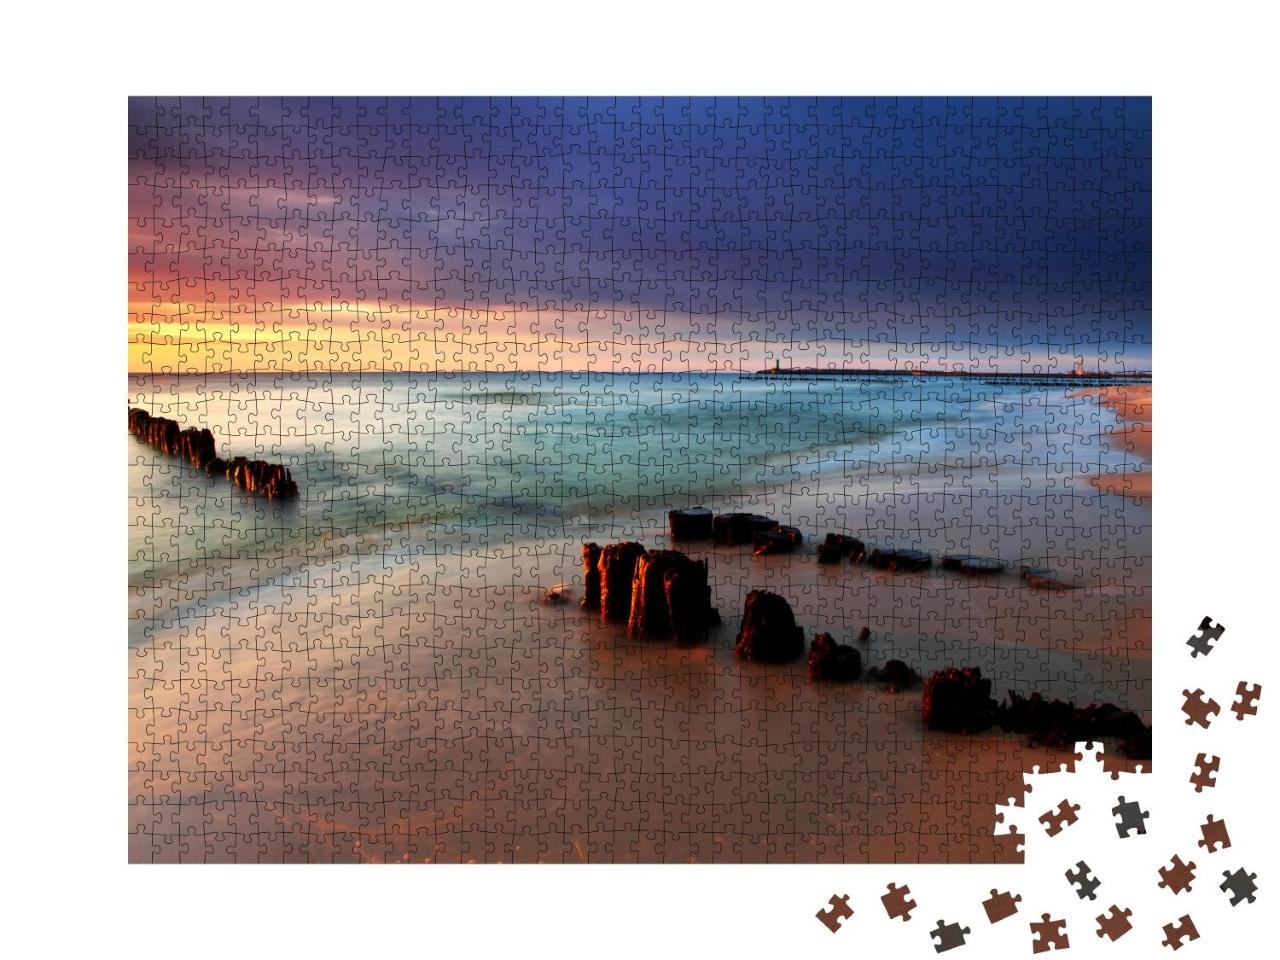 Puzzle 1000 Teile „Sonnenaufgang an der Ostsee, Polen“